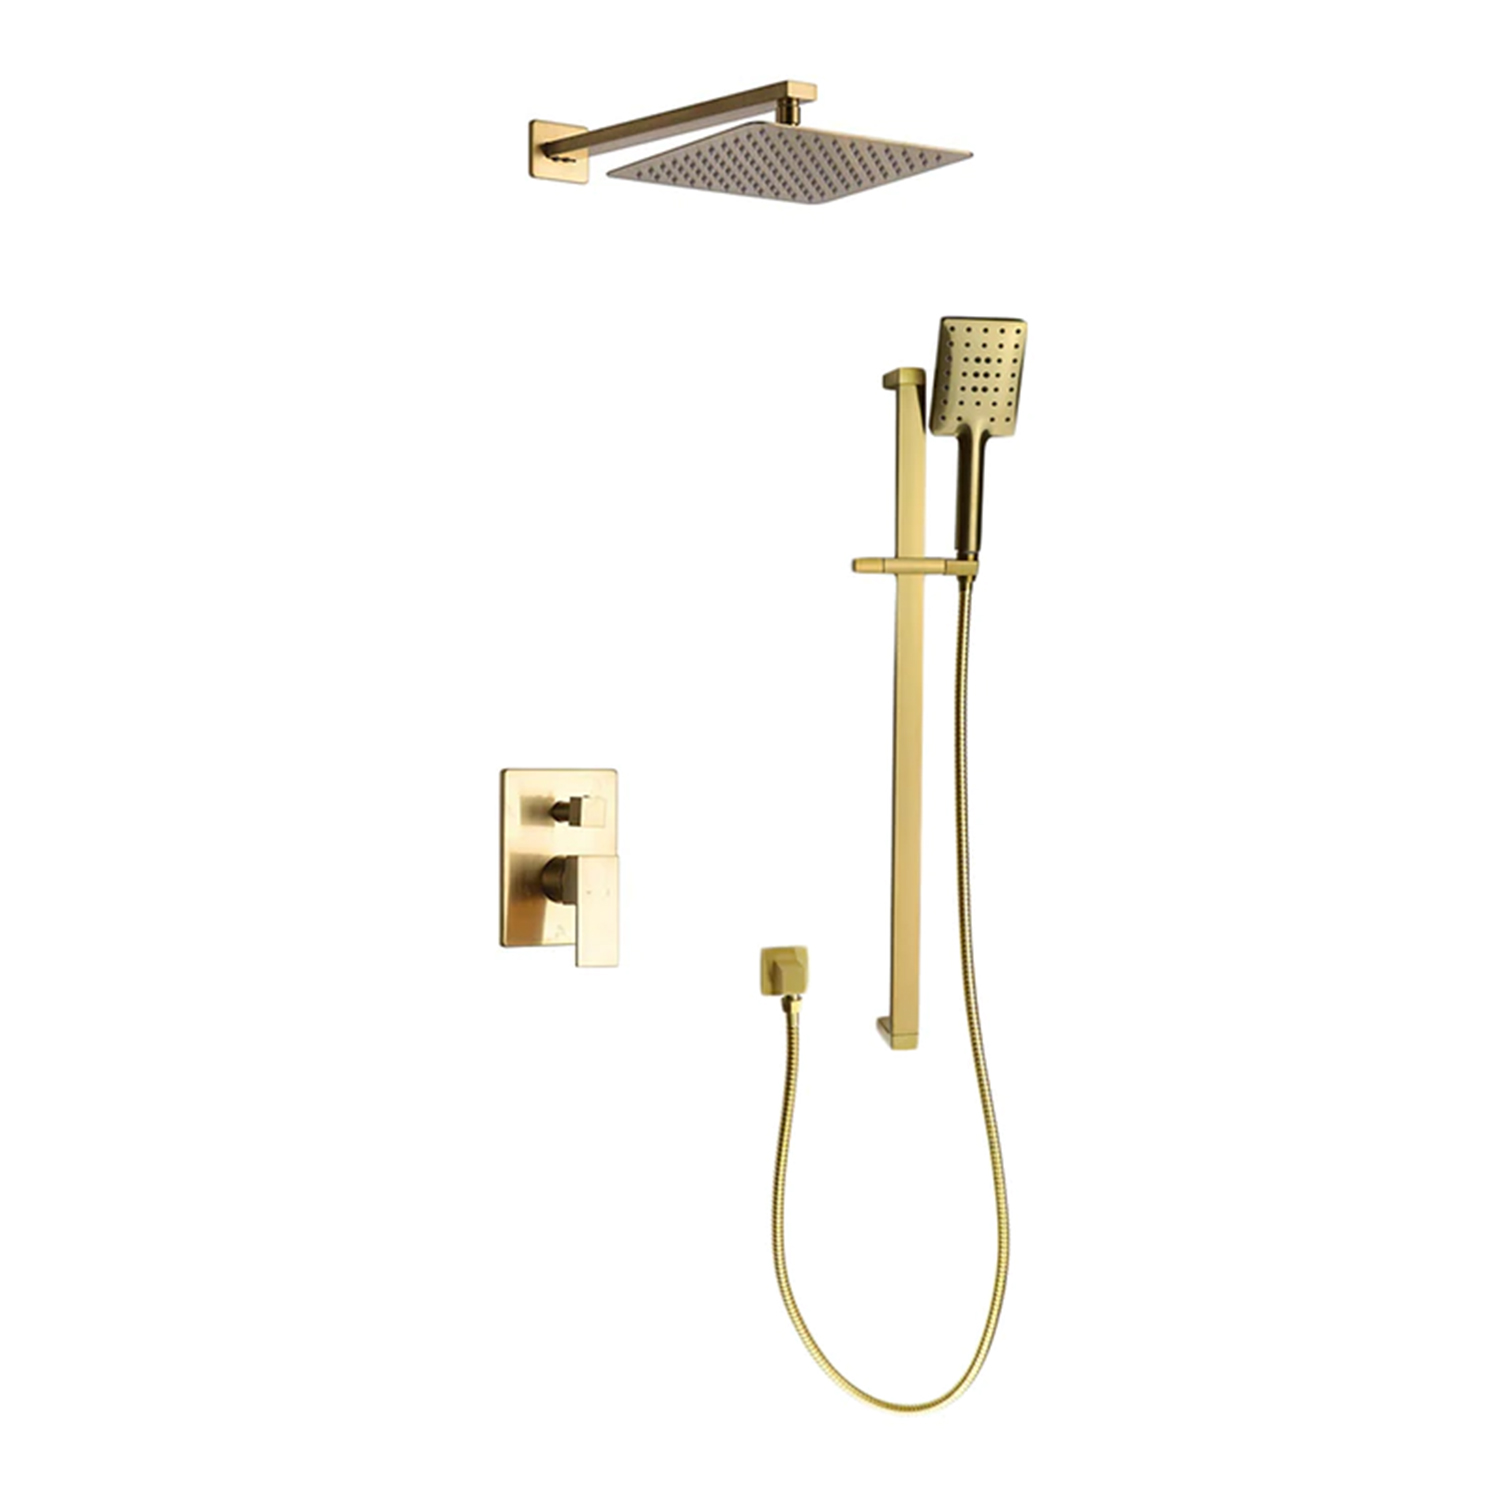 Kodaen F54123BG Shower mixer Brushed Gold Shower Faucet - 2-Way Shower System